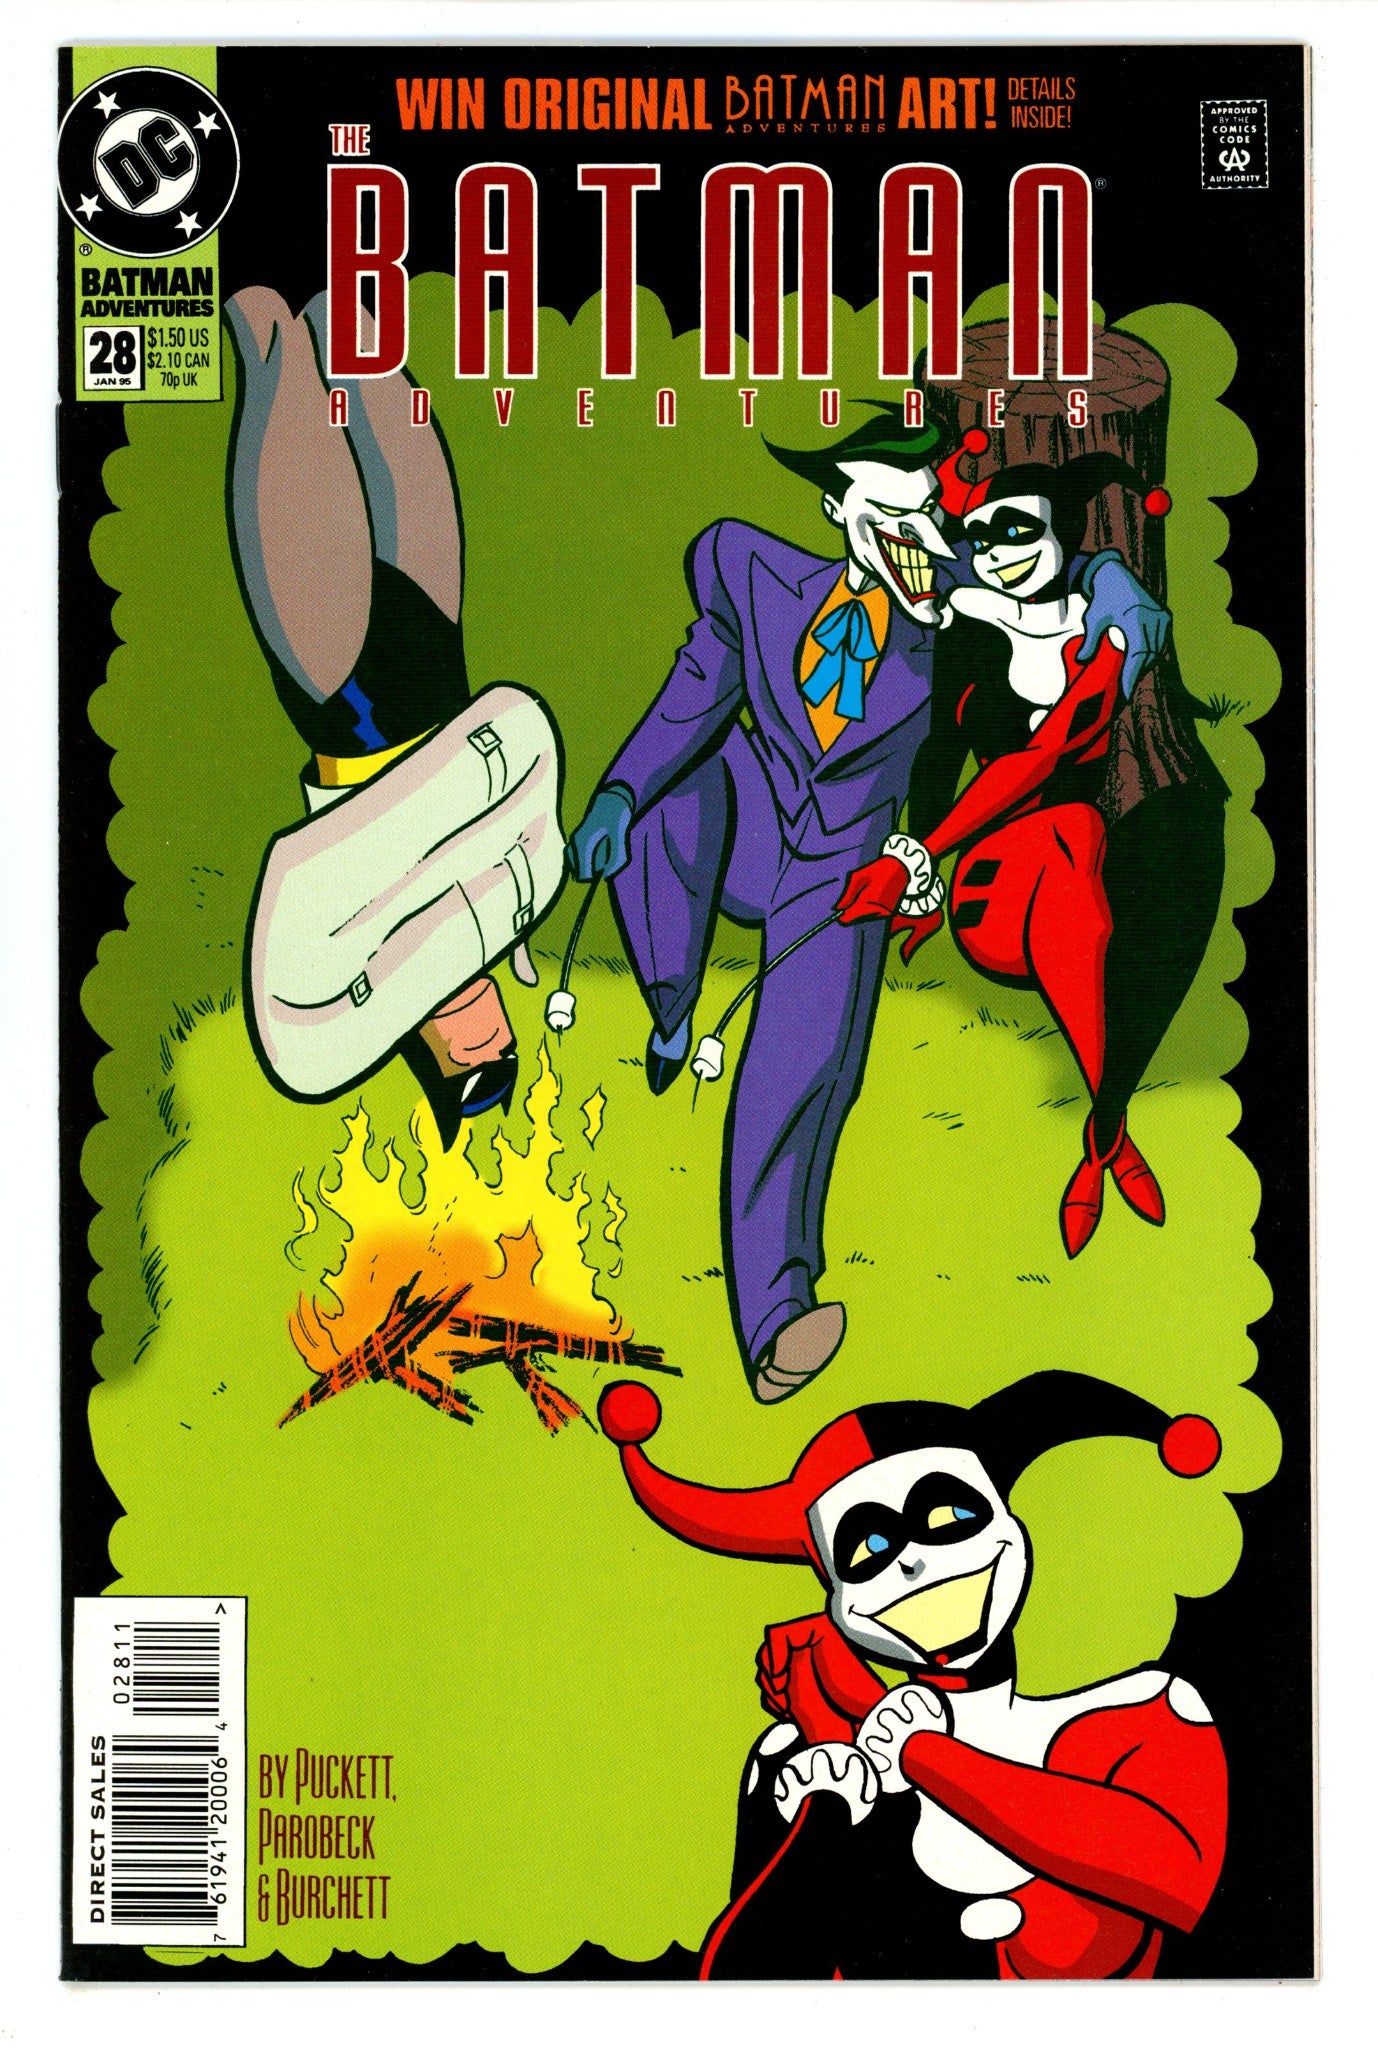 Dollar Comics: The Batman Adventures 12 Vol 1 [nn] NM- (9.2) (2020) 